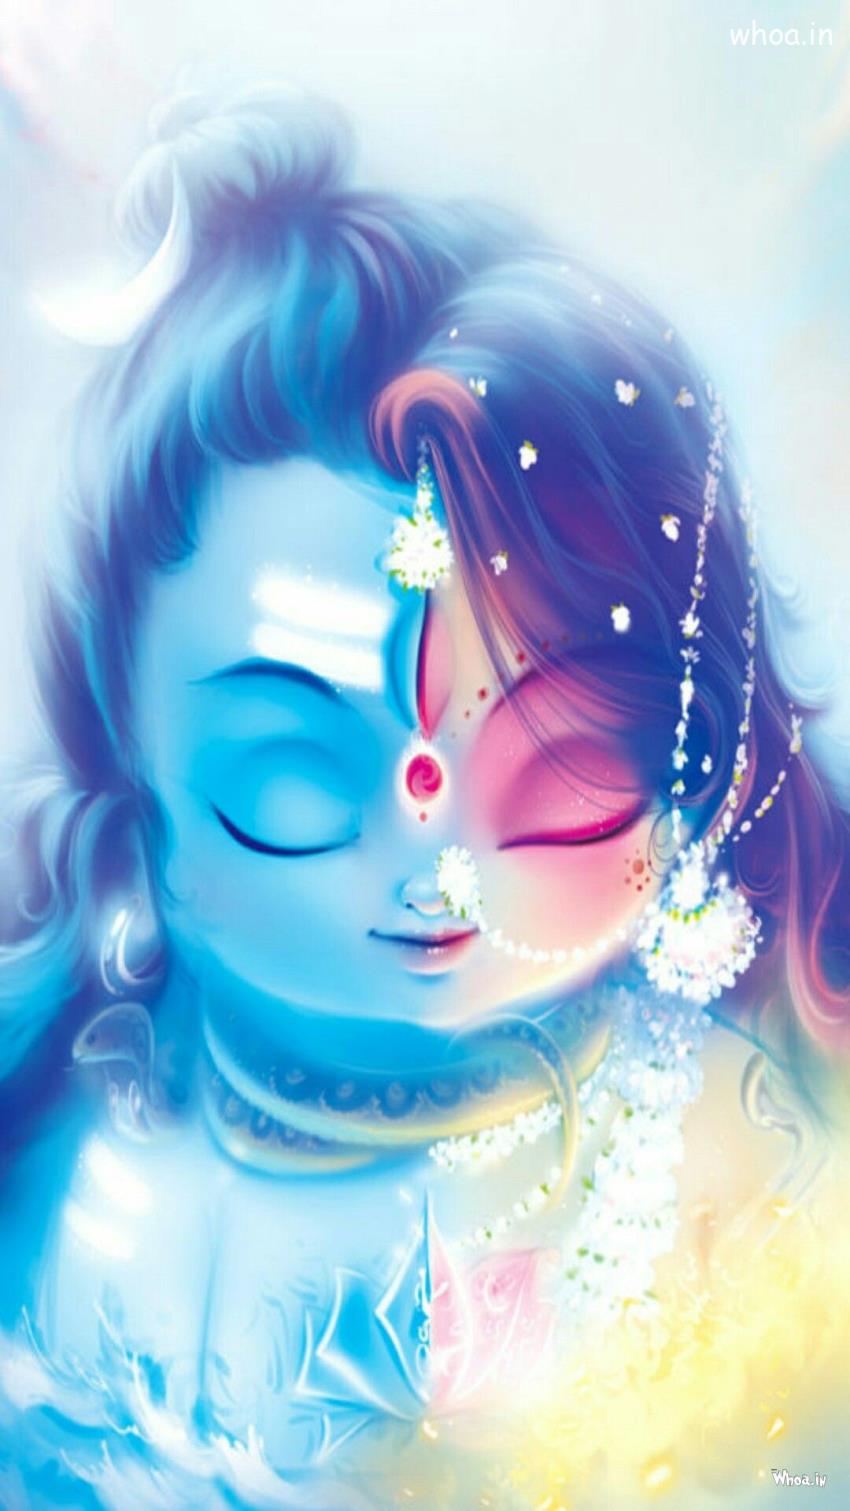 The Wonderful And Colorful Art Image Of Lord Shiva And Uma